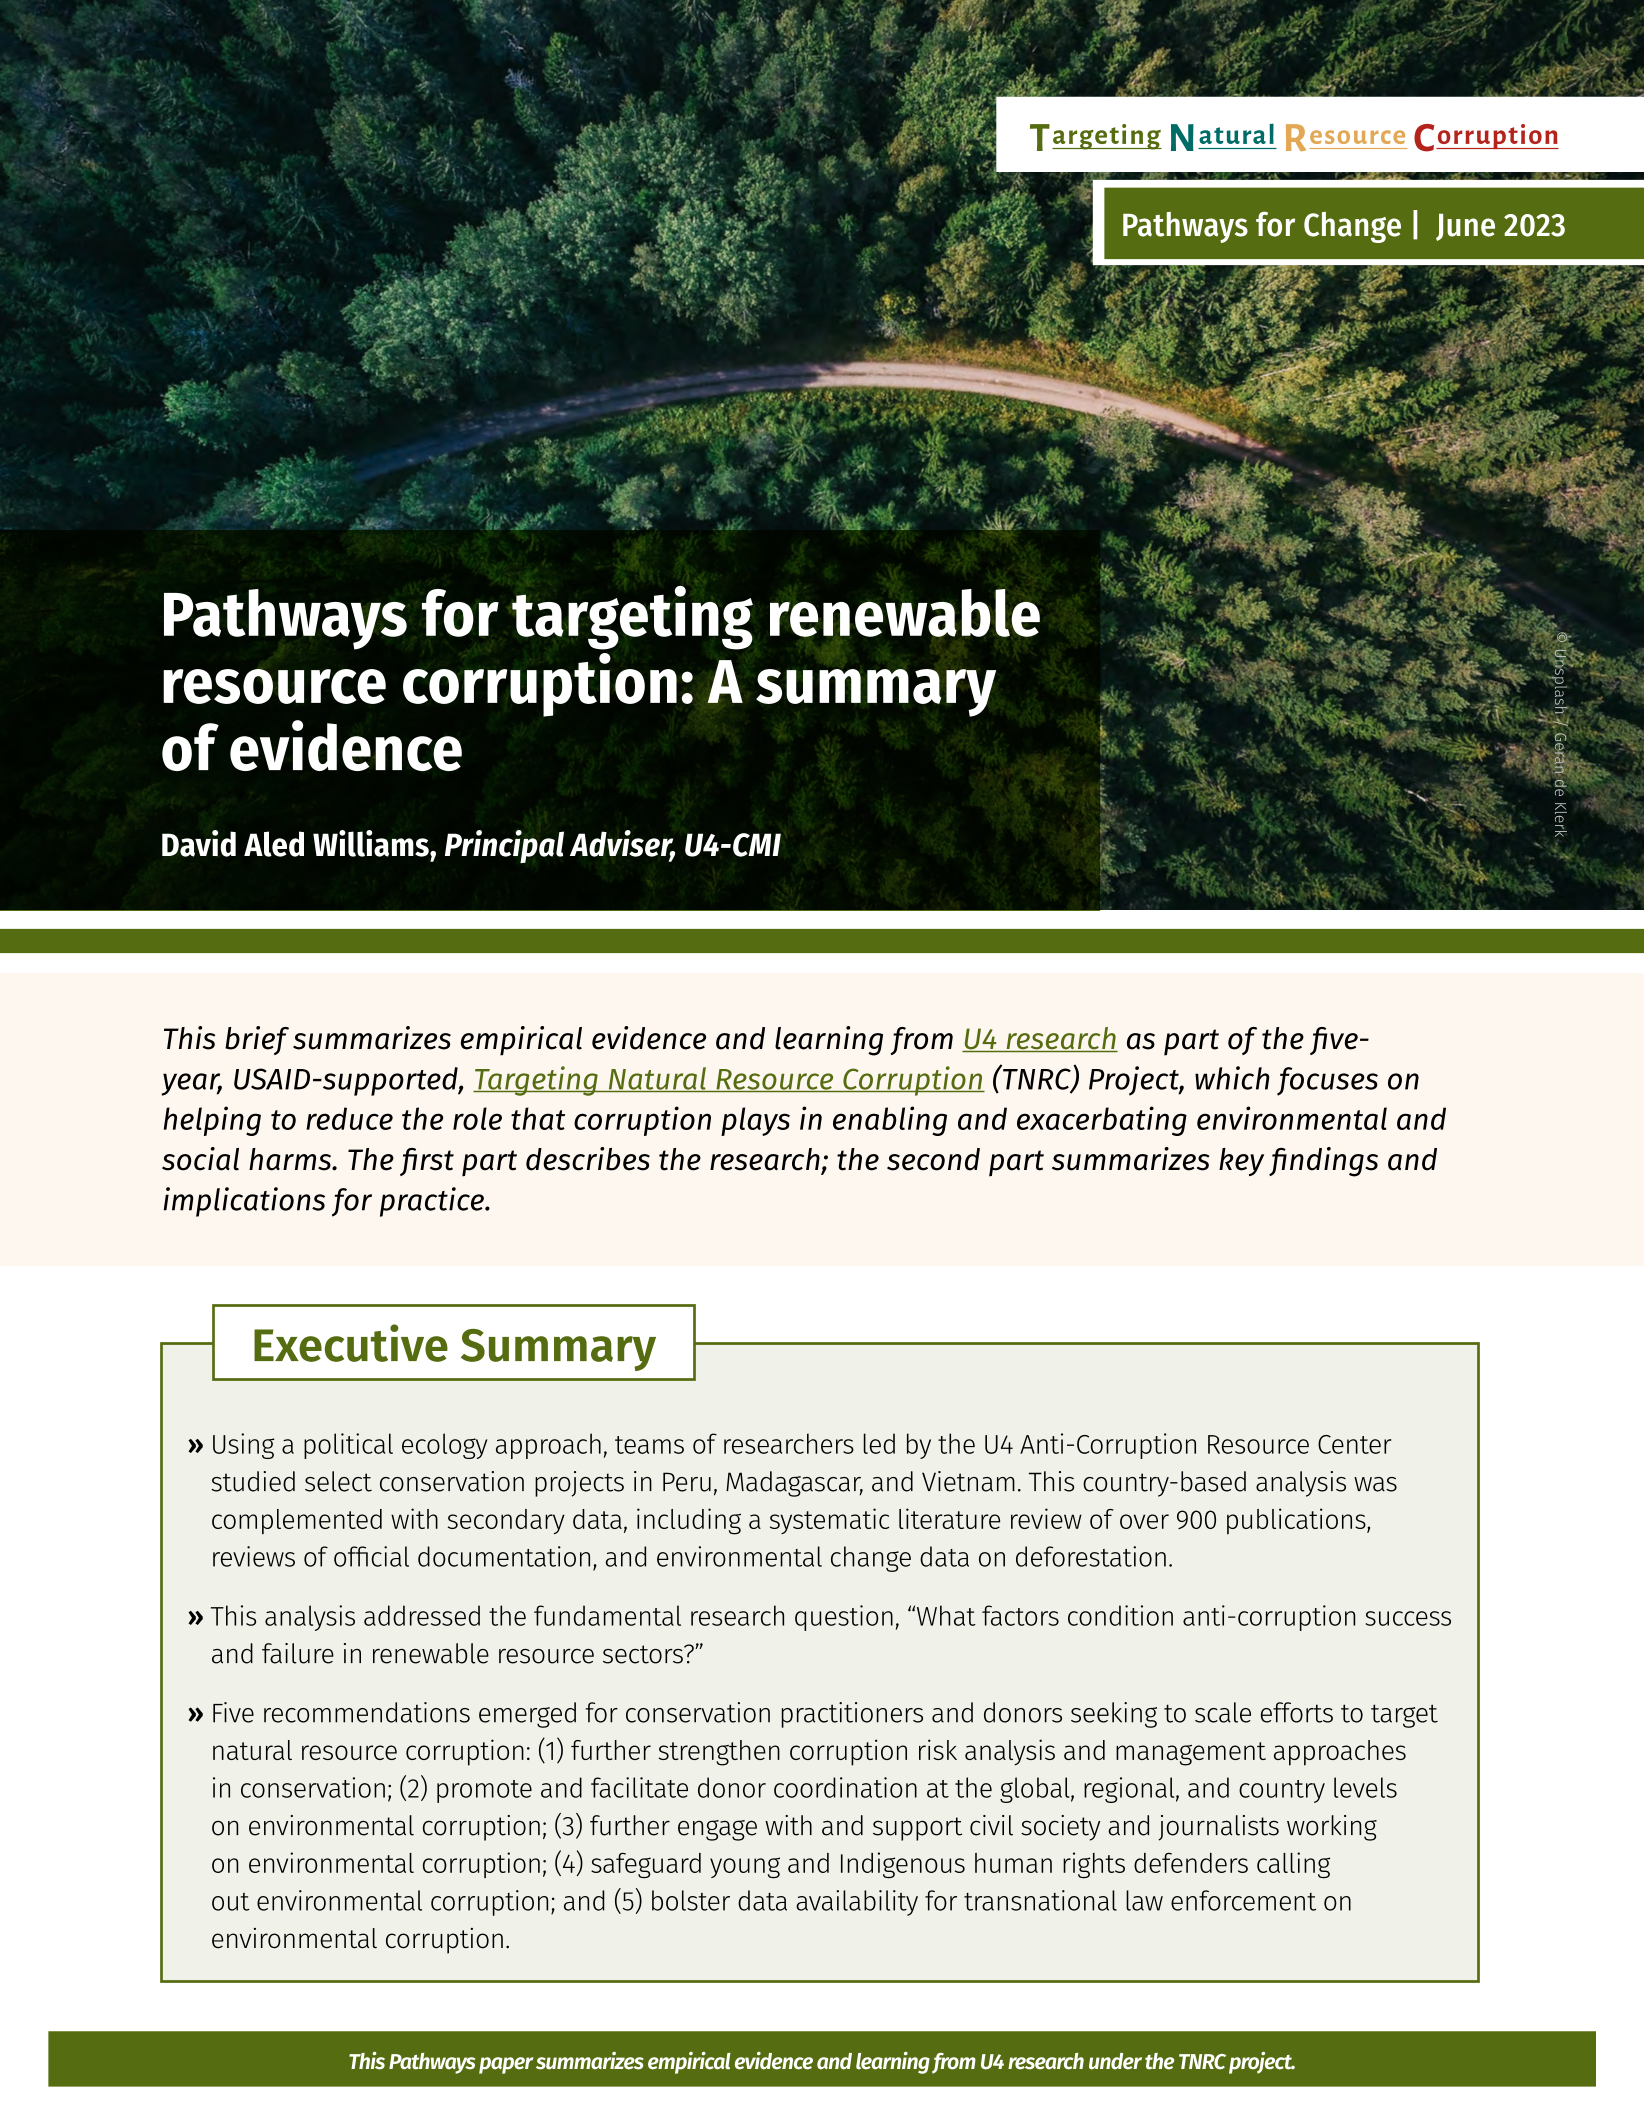 Pathways for targeting renewable resource corruption